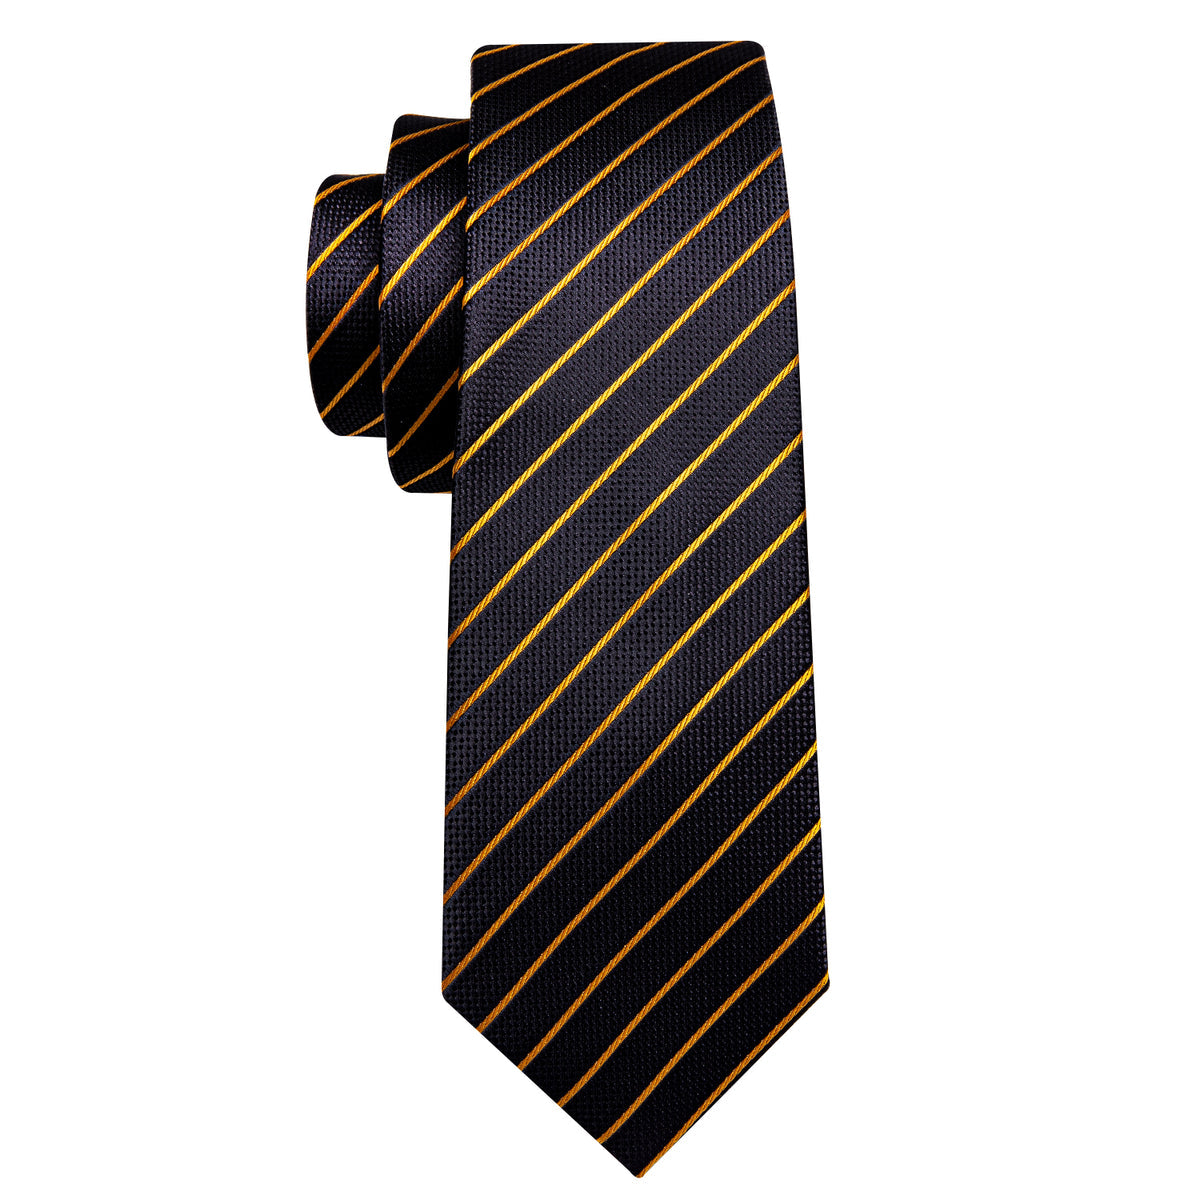 Men’s Silk Coordinated Tie Set - Black Gold Single Striped (5218)